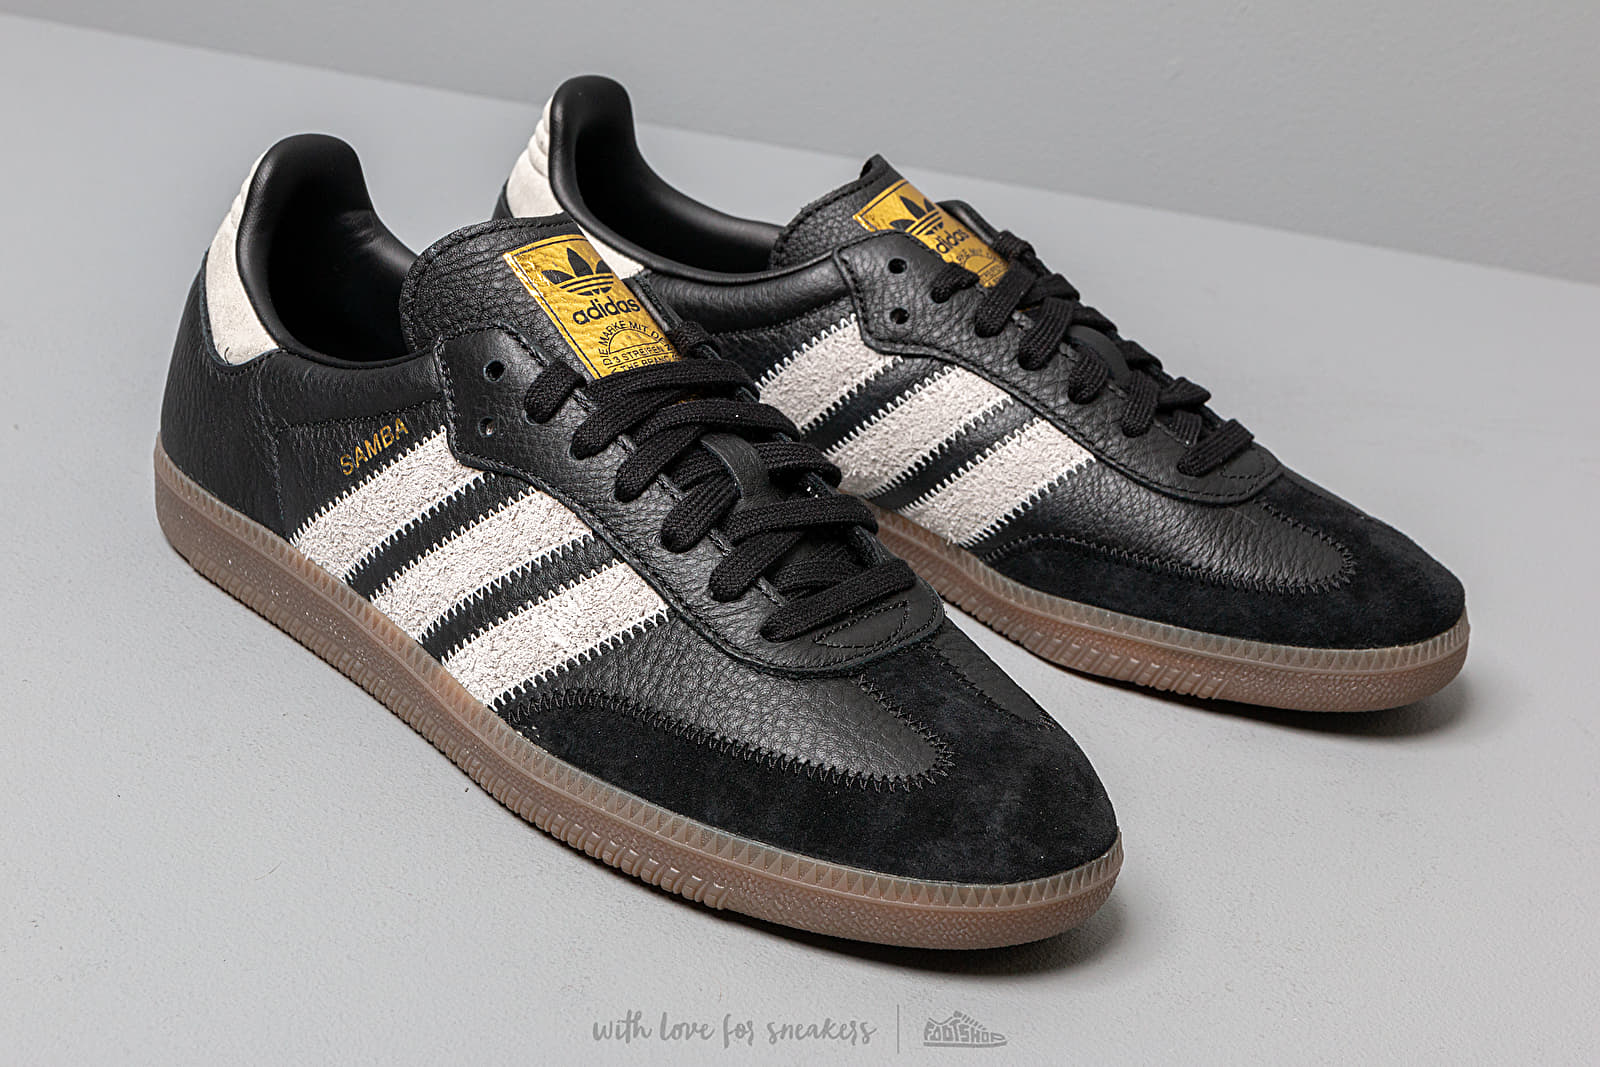 Chaussures et baskets homme adidas Samba OG Ft Core Black/ Raw White/ Gold  Metalic | Footshop